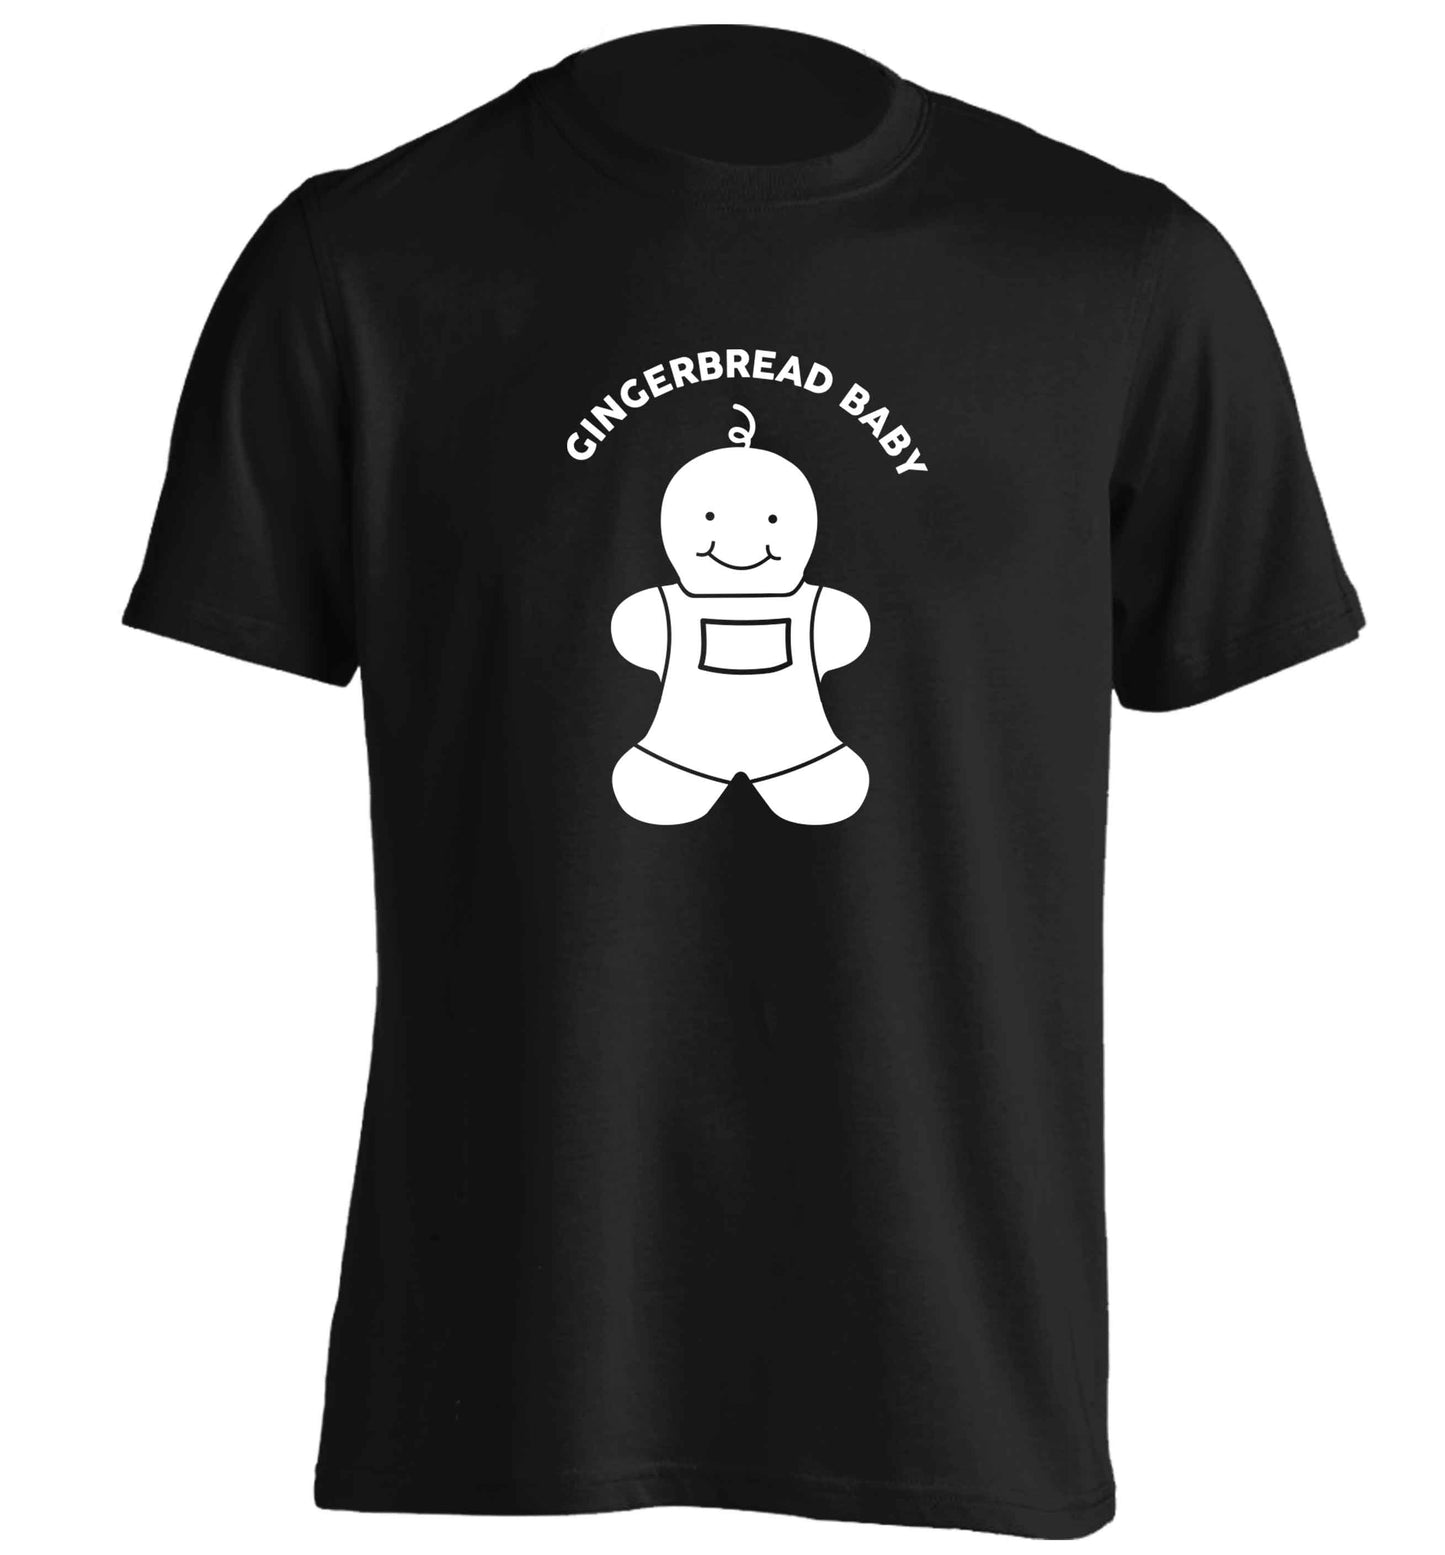 Gingerbread baby adults unisex black Tshirt 2XL